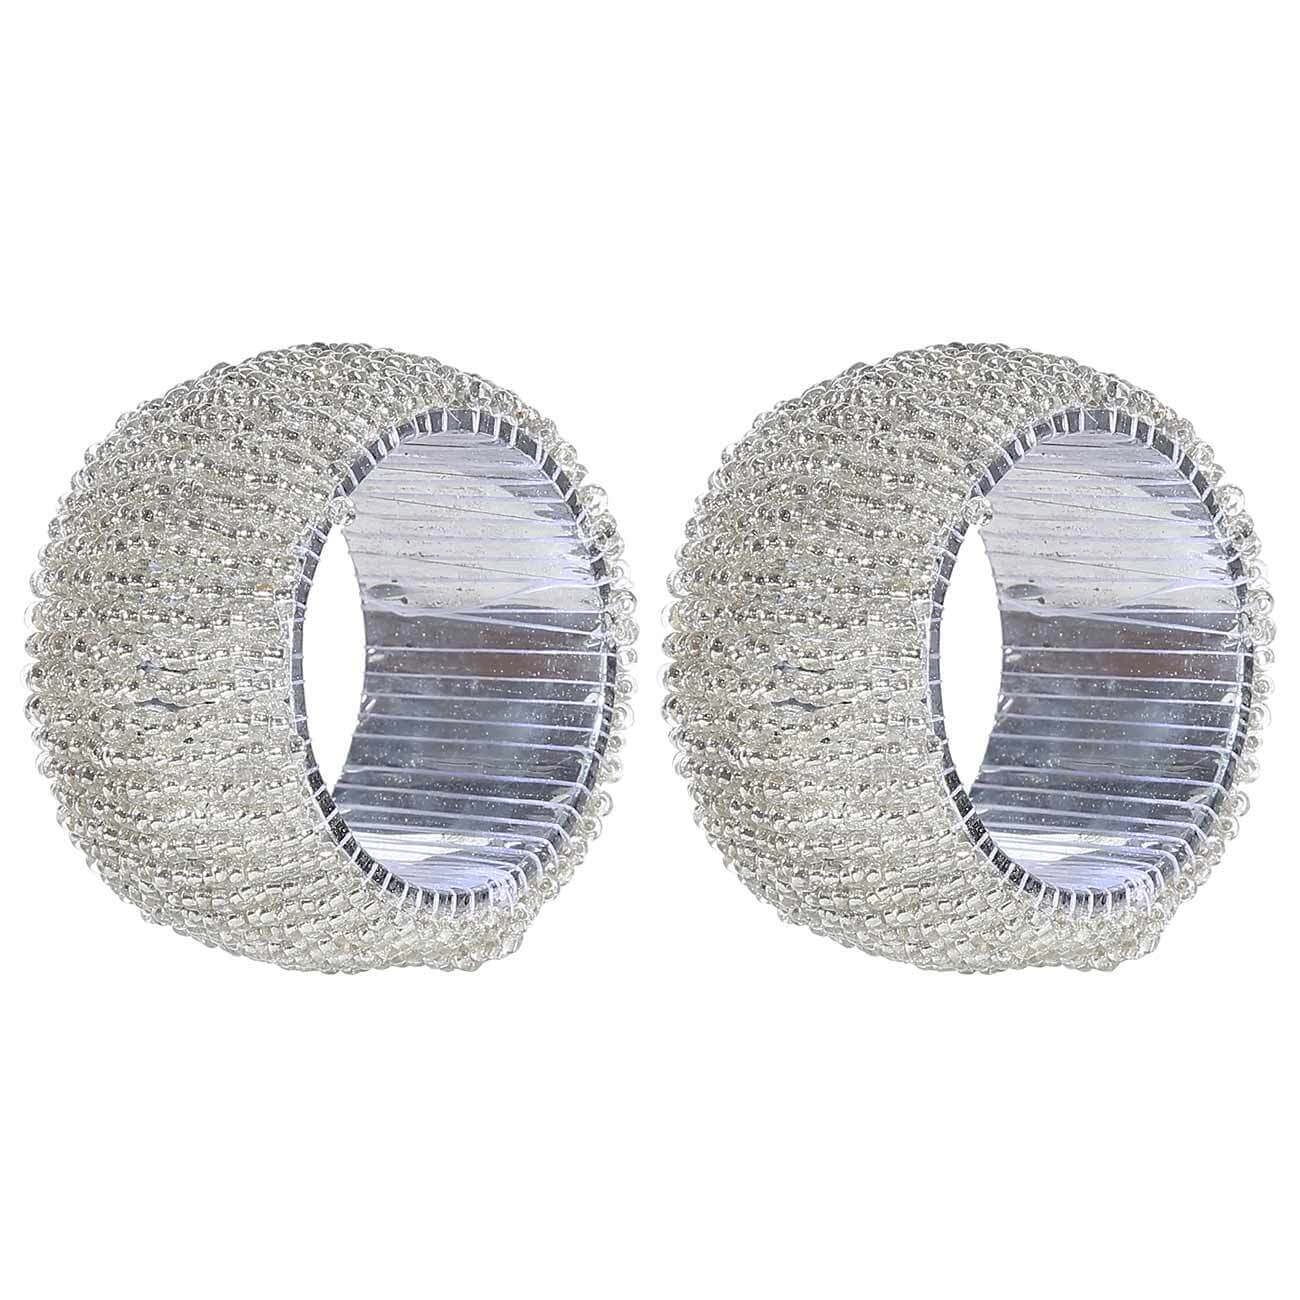 Кольцо для салфеток, 5 см, 2 шт, бисер, круглое, белое, Shiny beads кольцо для салфеток 5 см 2 шт бисер круглое золотистое shiny beads